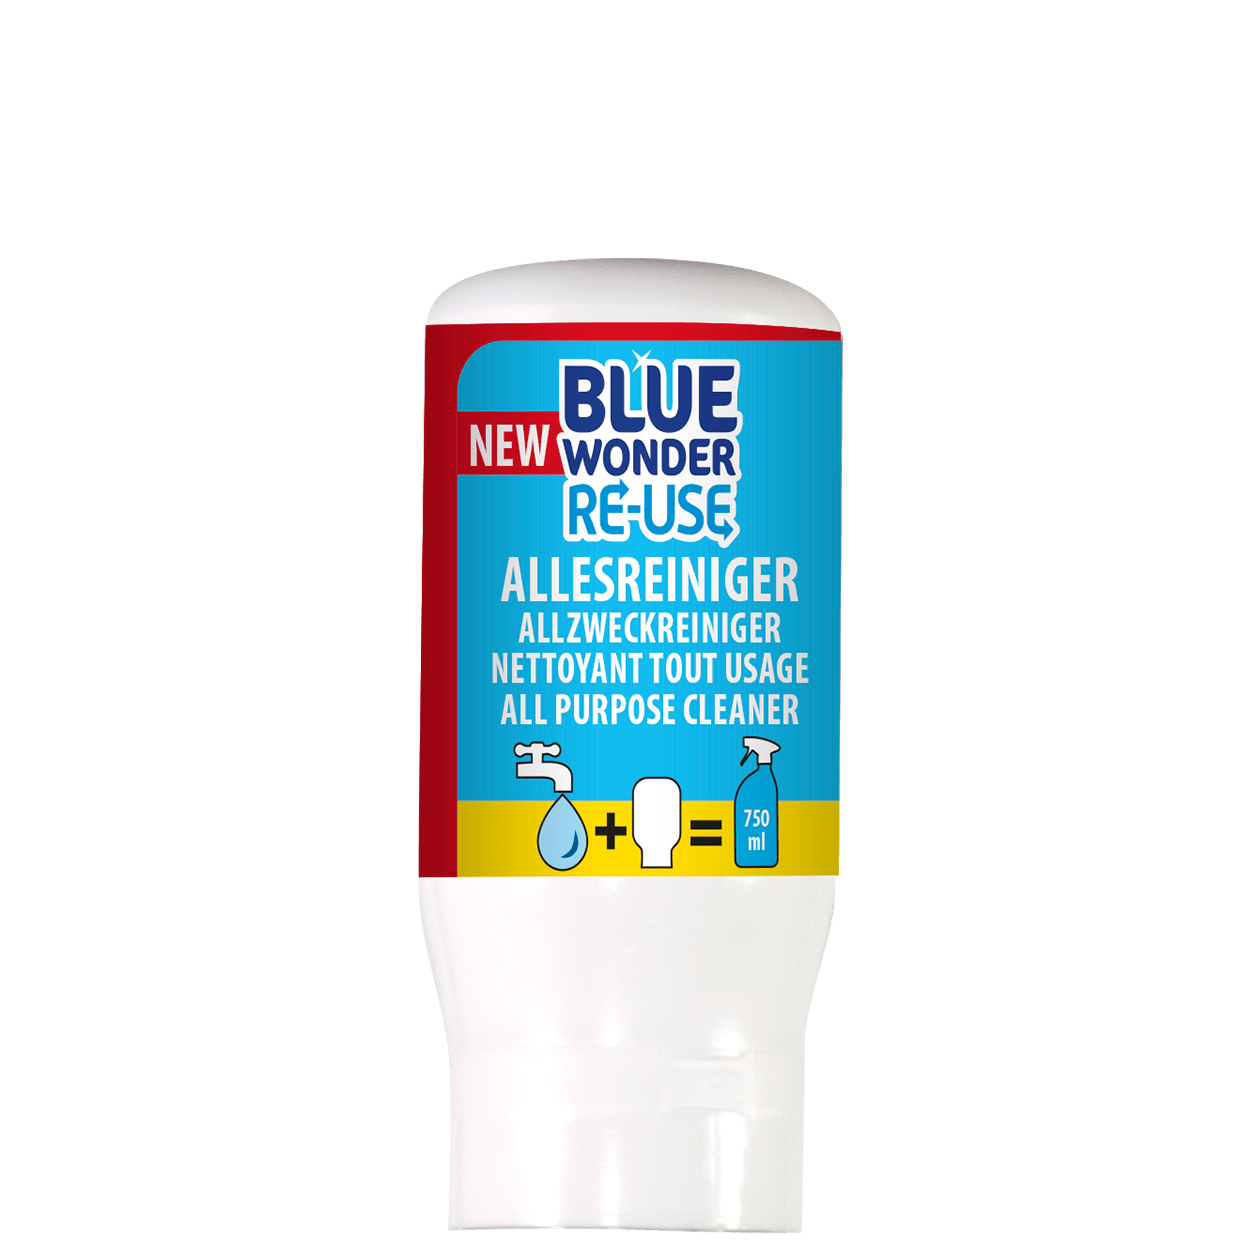 8712038001950 Blue Wonder Allesreiniger refill capsule 102020 3